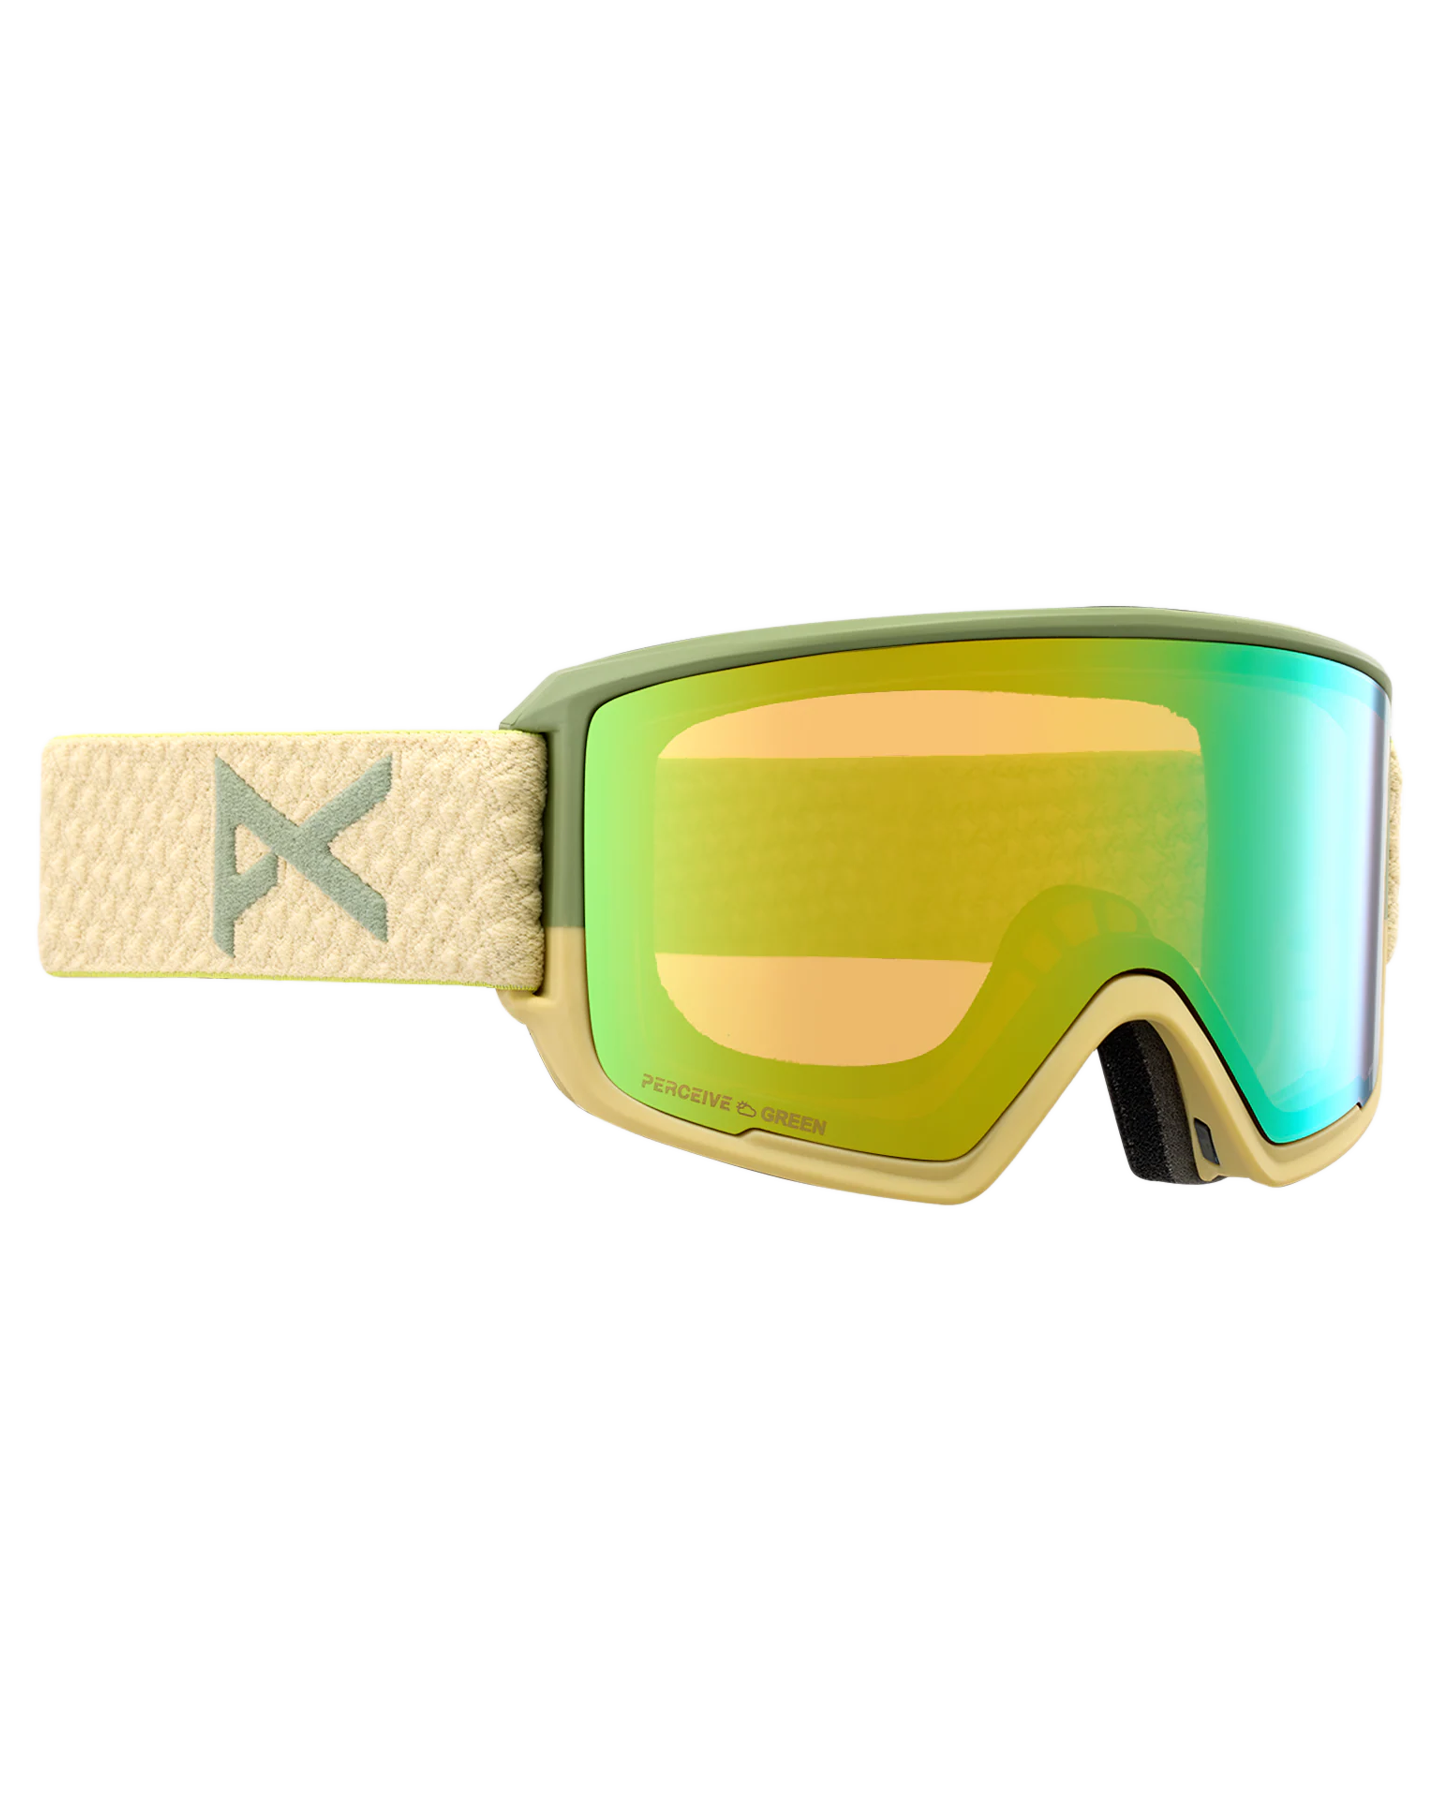 Anon M3 Snow Goggles + Bonus Lens + Mfi® Face Mask - Mushroom/Perceive Variable Green Lens Snow Goggles - Mens - Trojan Wake Ski Snow